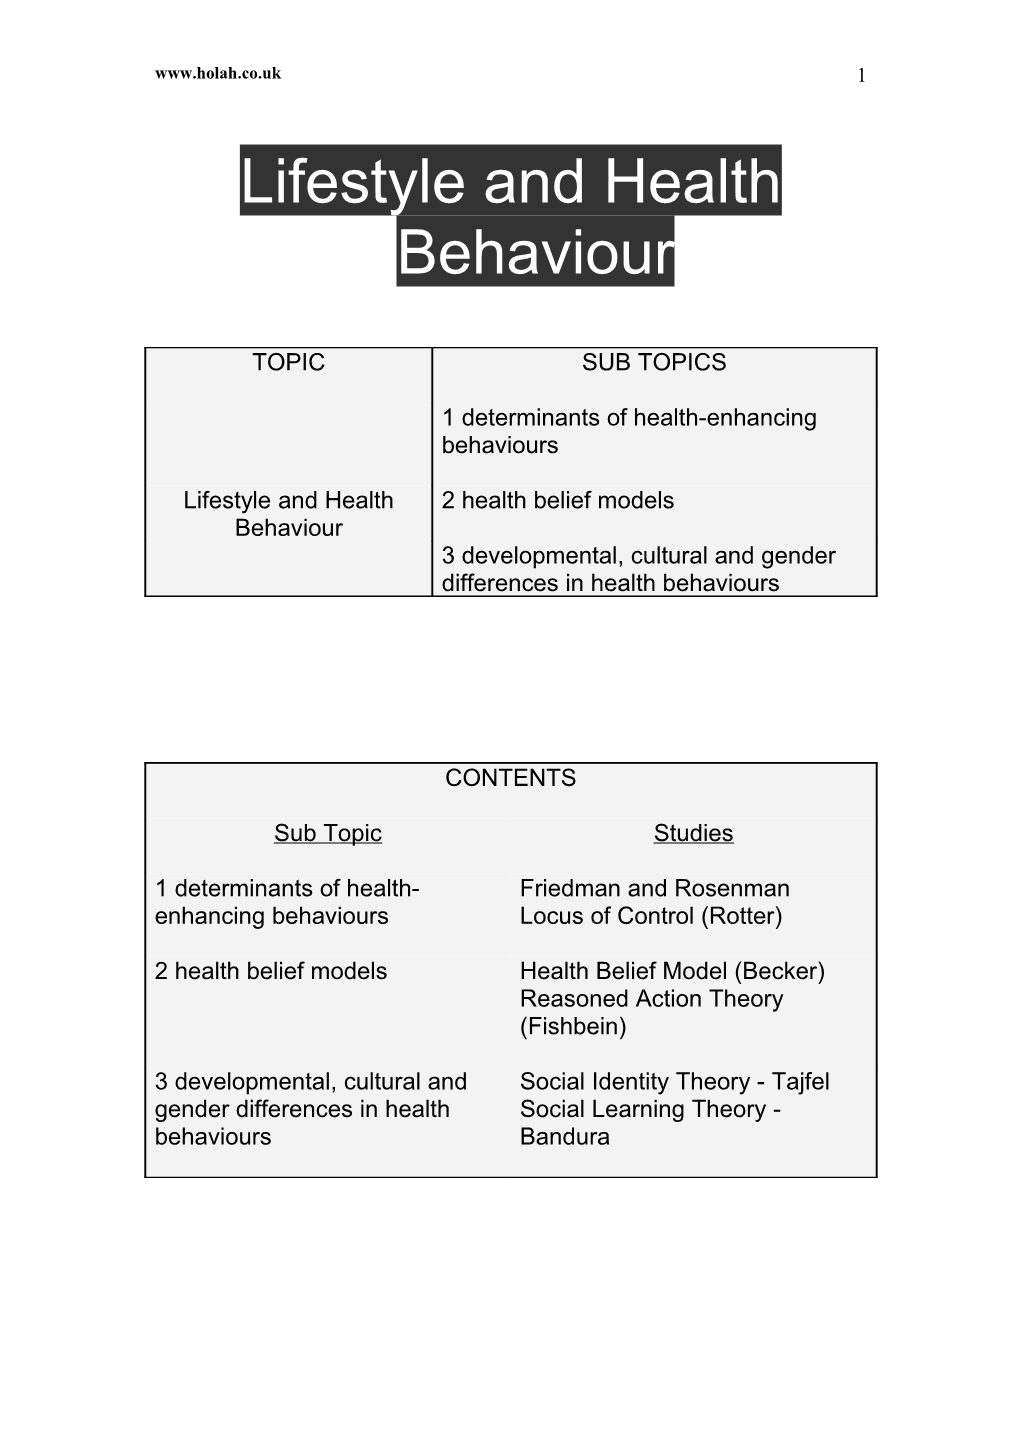 Lifestyle and Health Behaviour